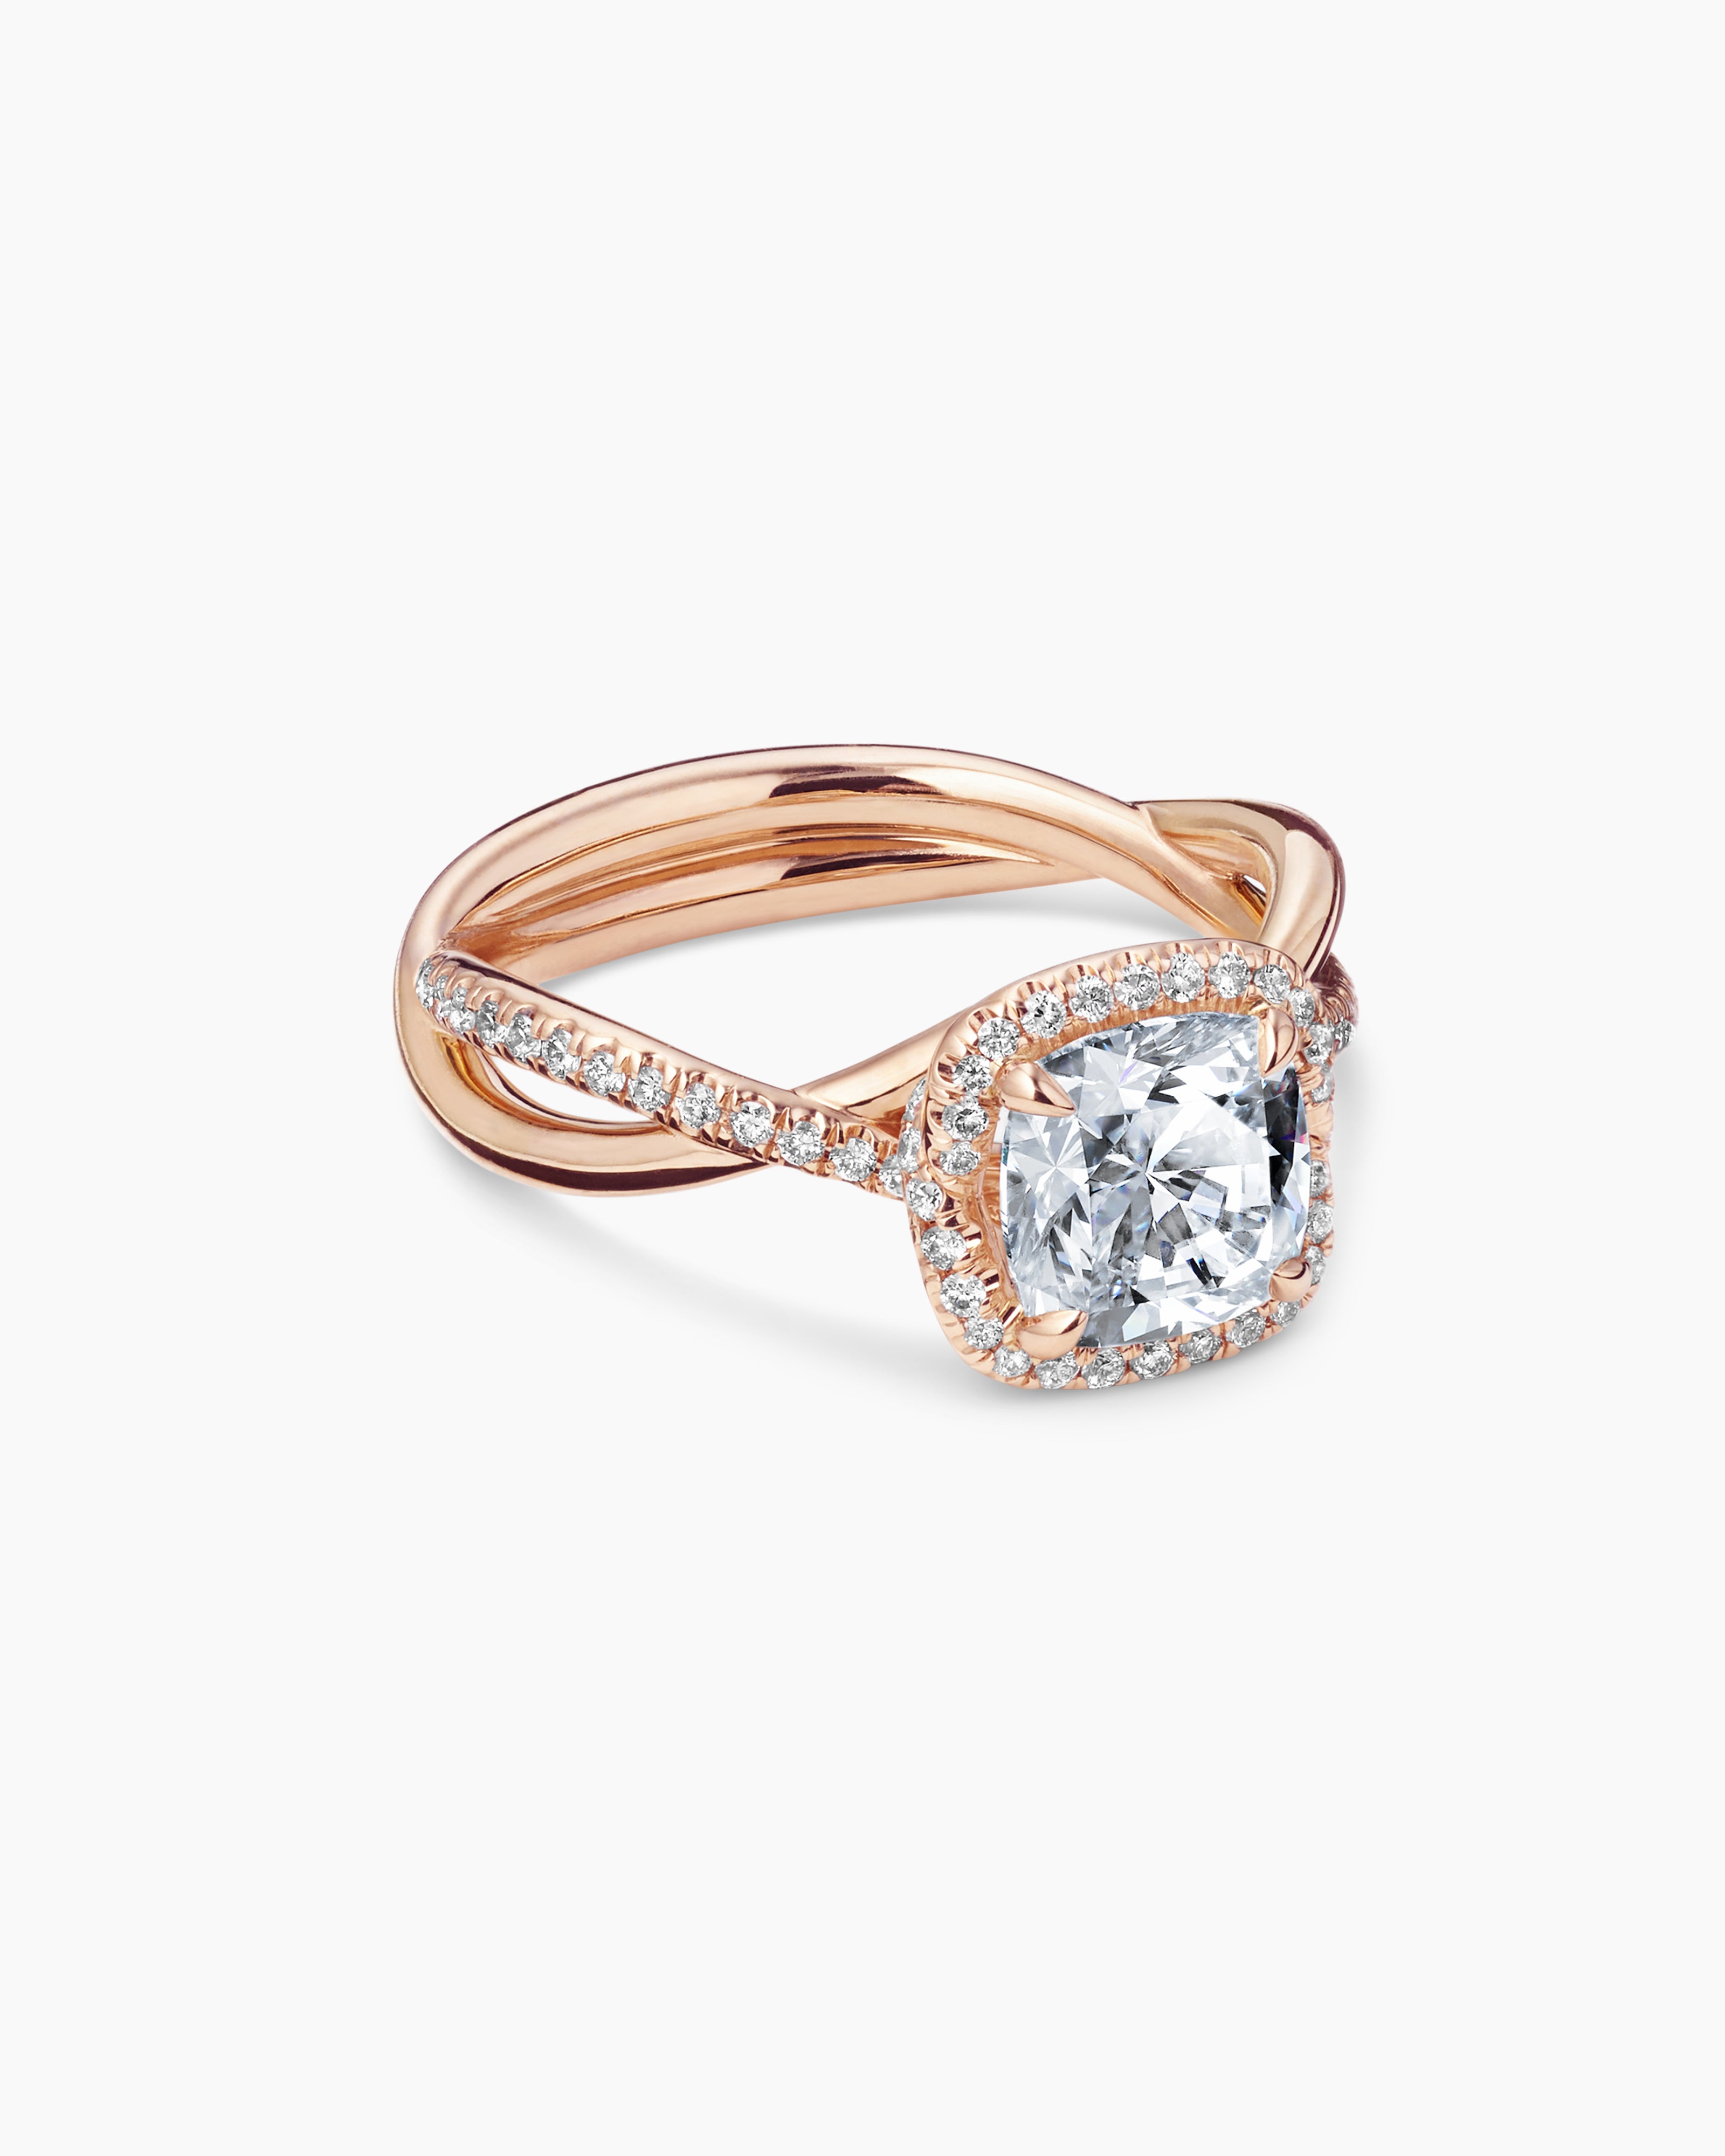 1.2ct Round Cut Simulated Diamond Ring 14k Rose Gold Plated Infinity Wedding  | eBay